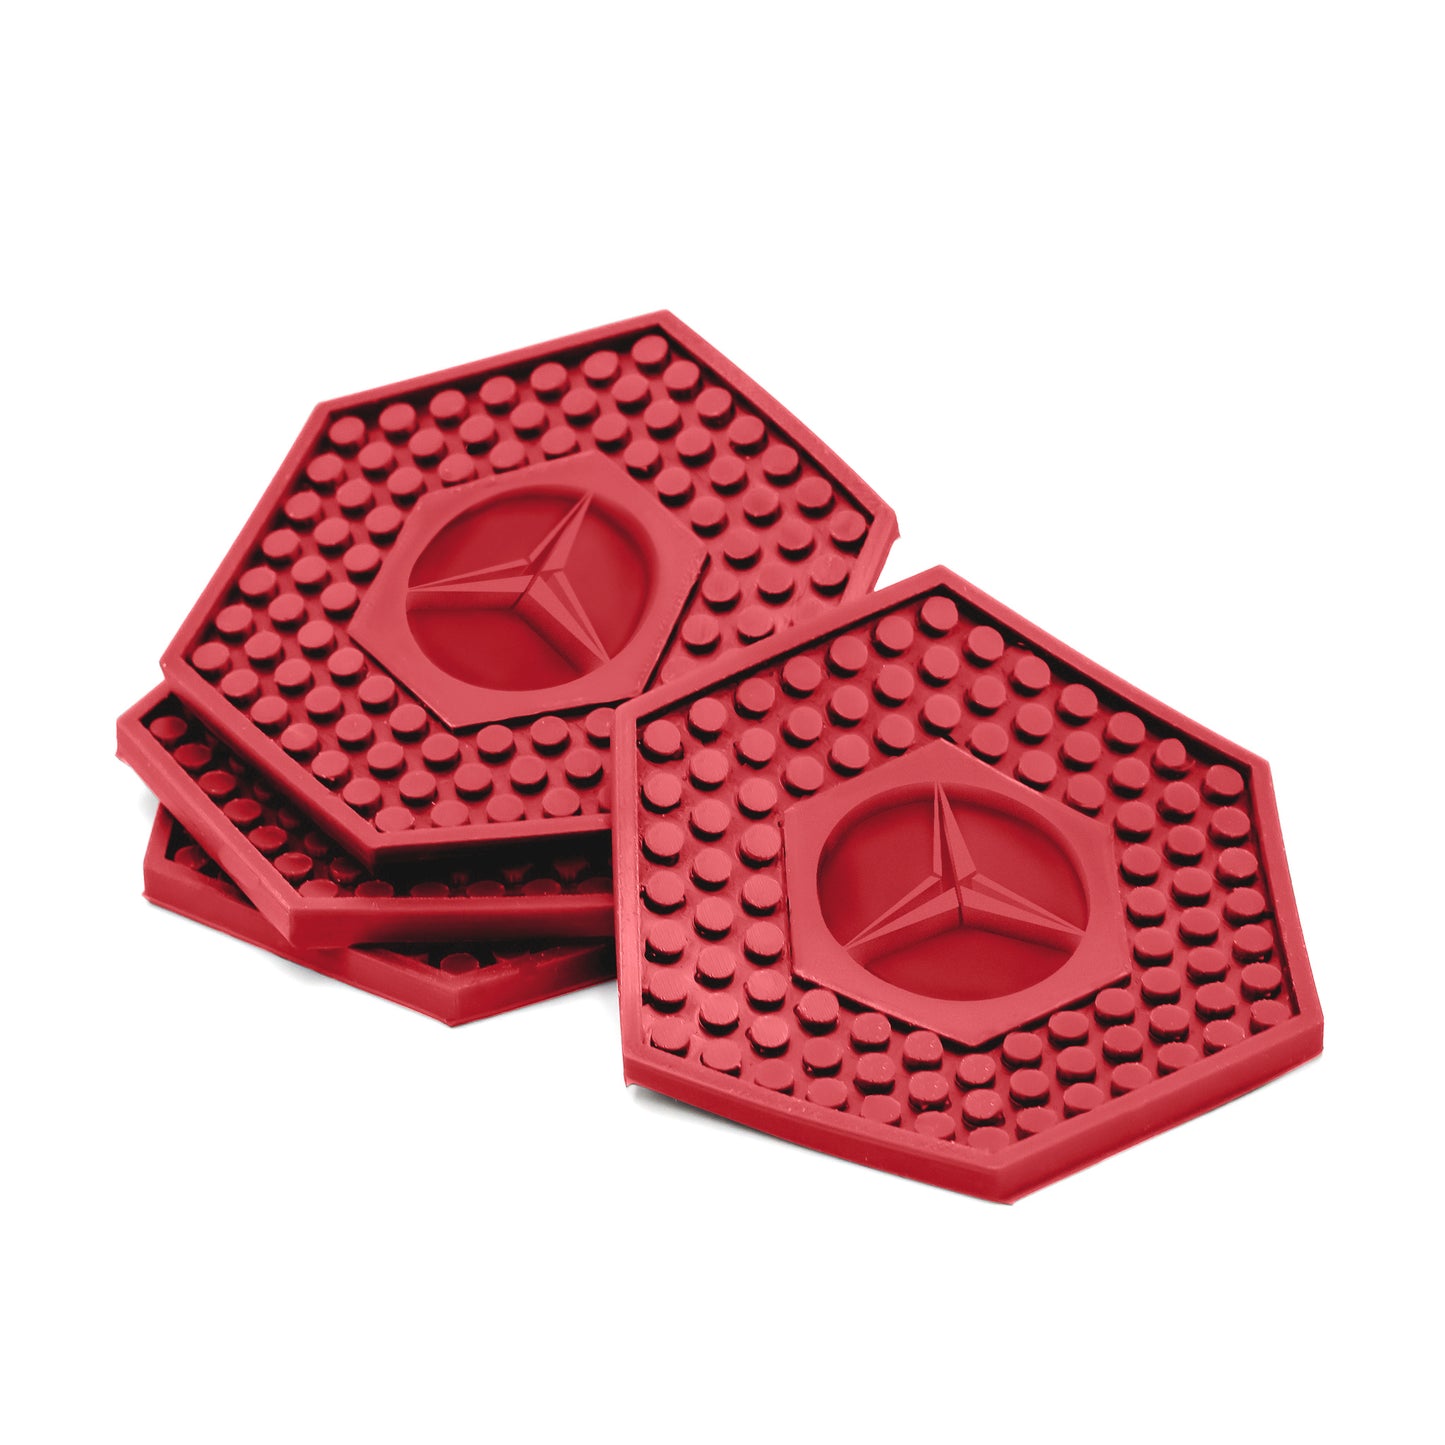 Customizable Silicone Coasters - Set of 4